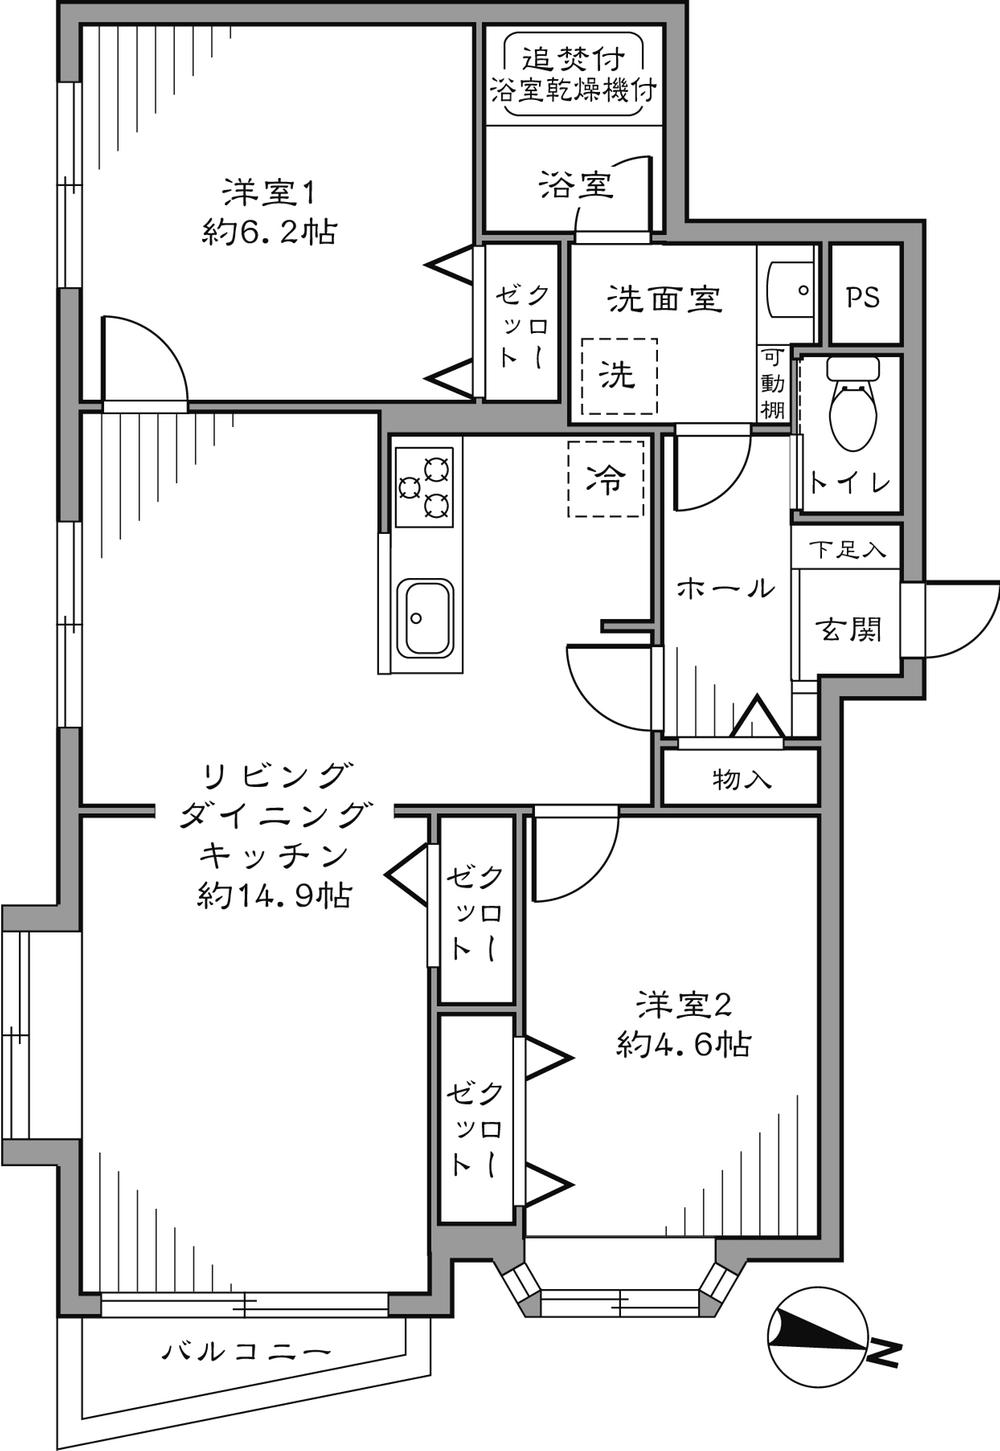 Floor plan. 2LDK, Price 31,800,000 yen, Occupied area 61.73 sq m , Balcony area 3.05 sq m